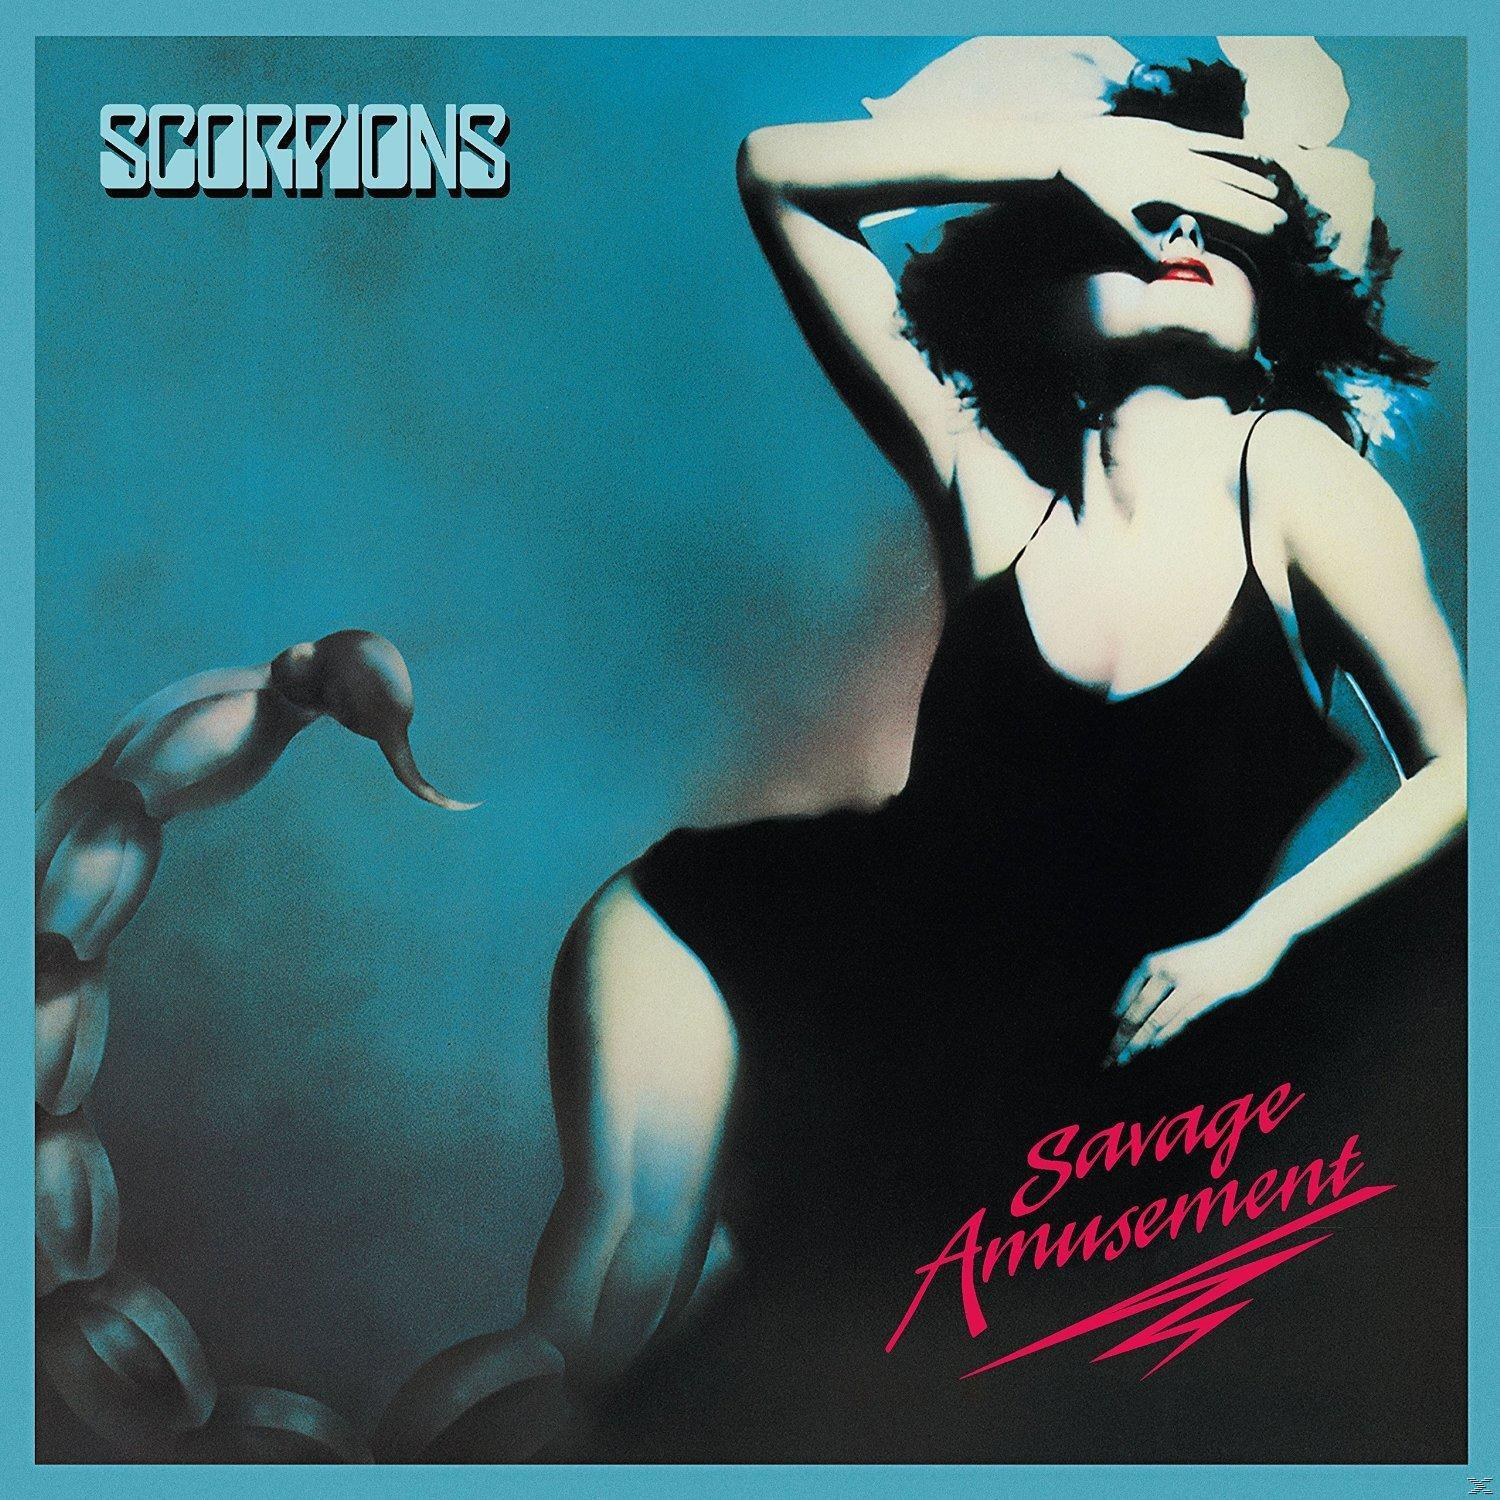 Scorpions - Edition) Amusement - Video) Deluxe + DVD (CD Savage Anniversary (50th